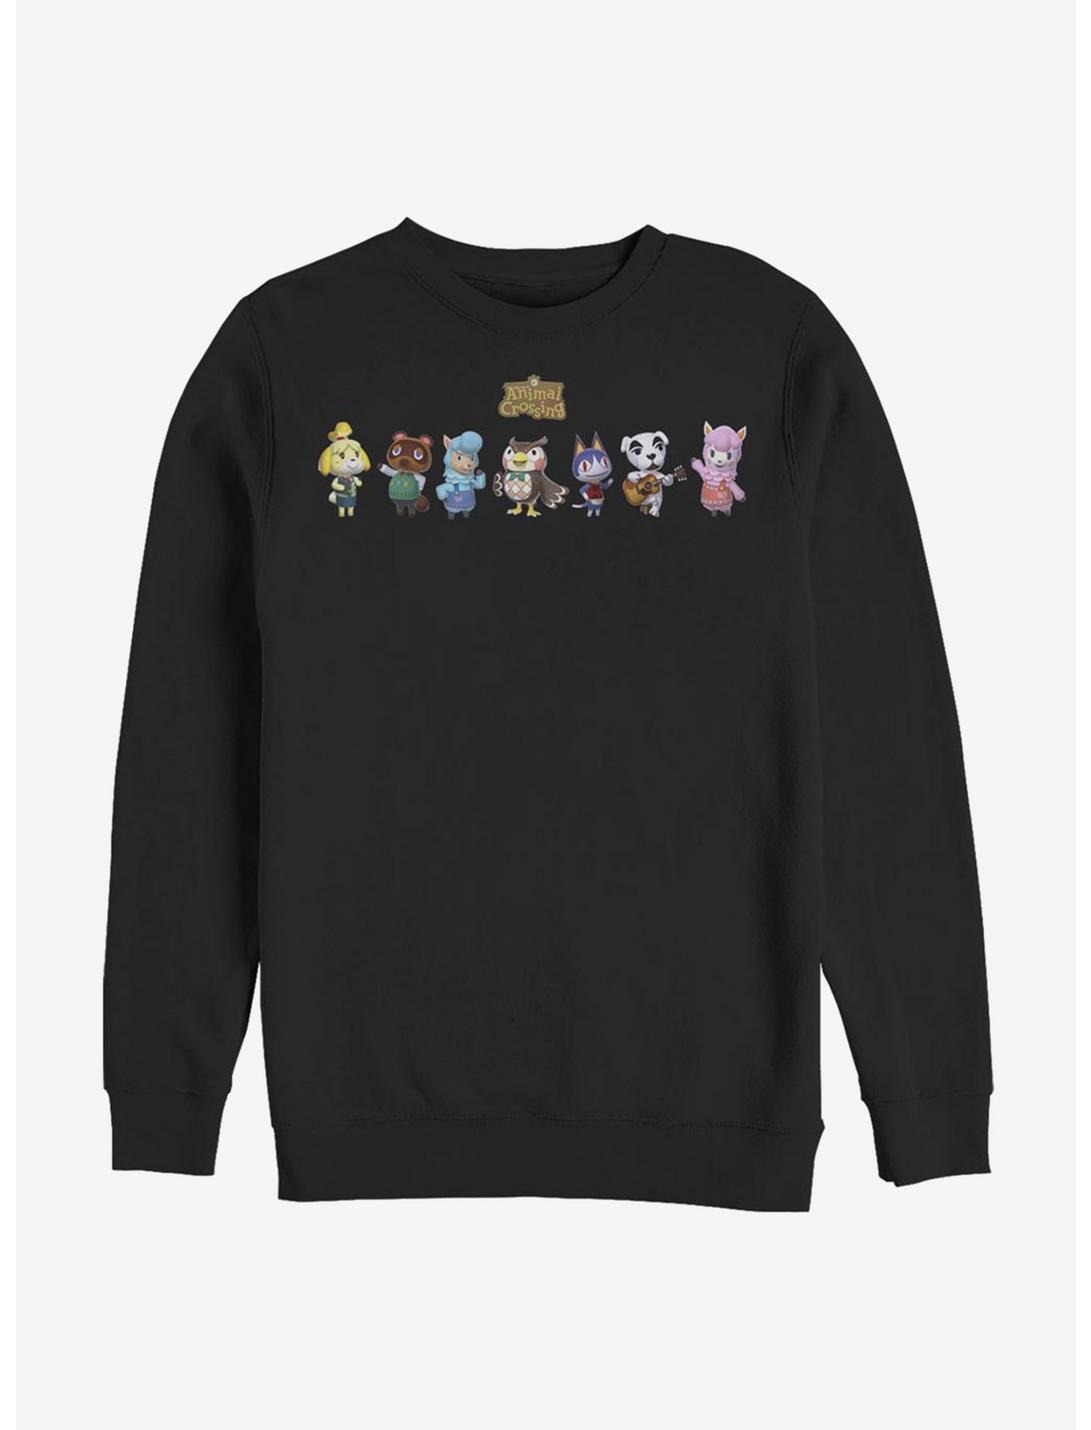 Plus Size Animal Crossing Friendly Neighbors Sweatshirt, BLACK, hi-res